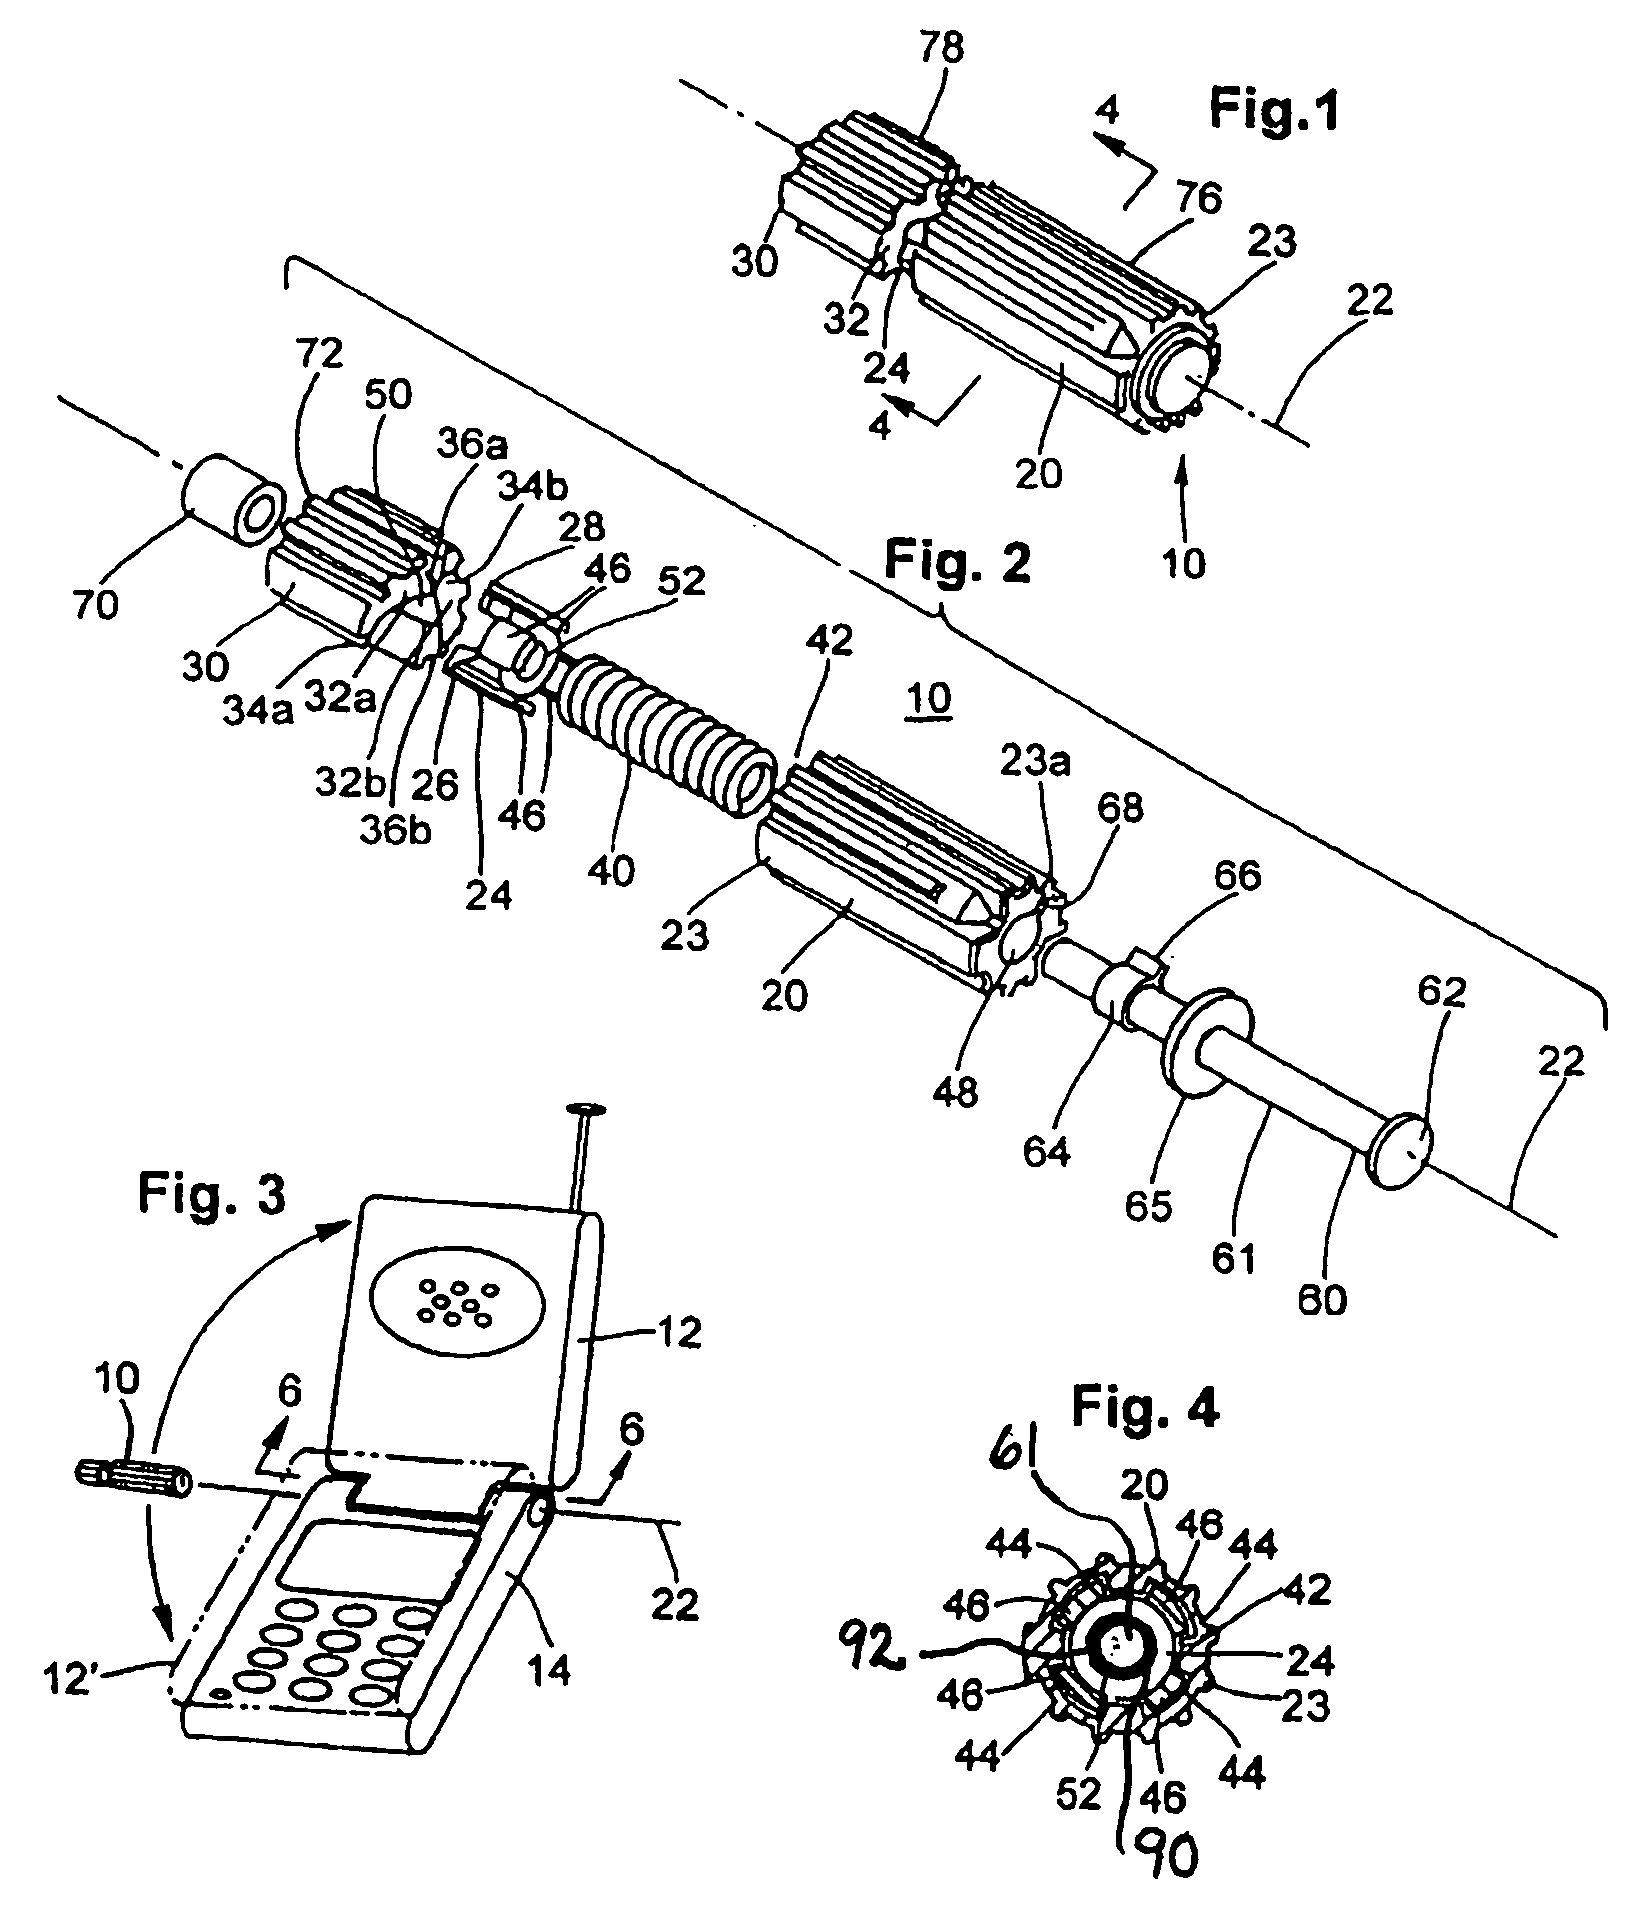 Bistable hinge with dampening mechanism